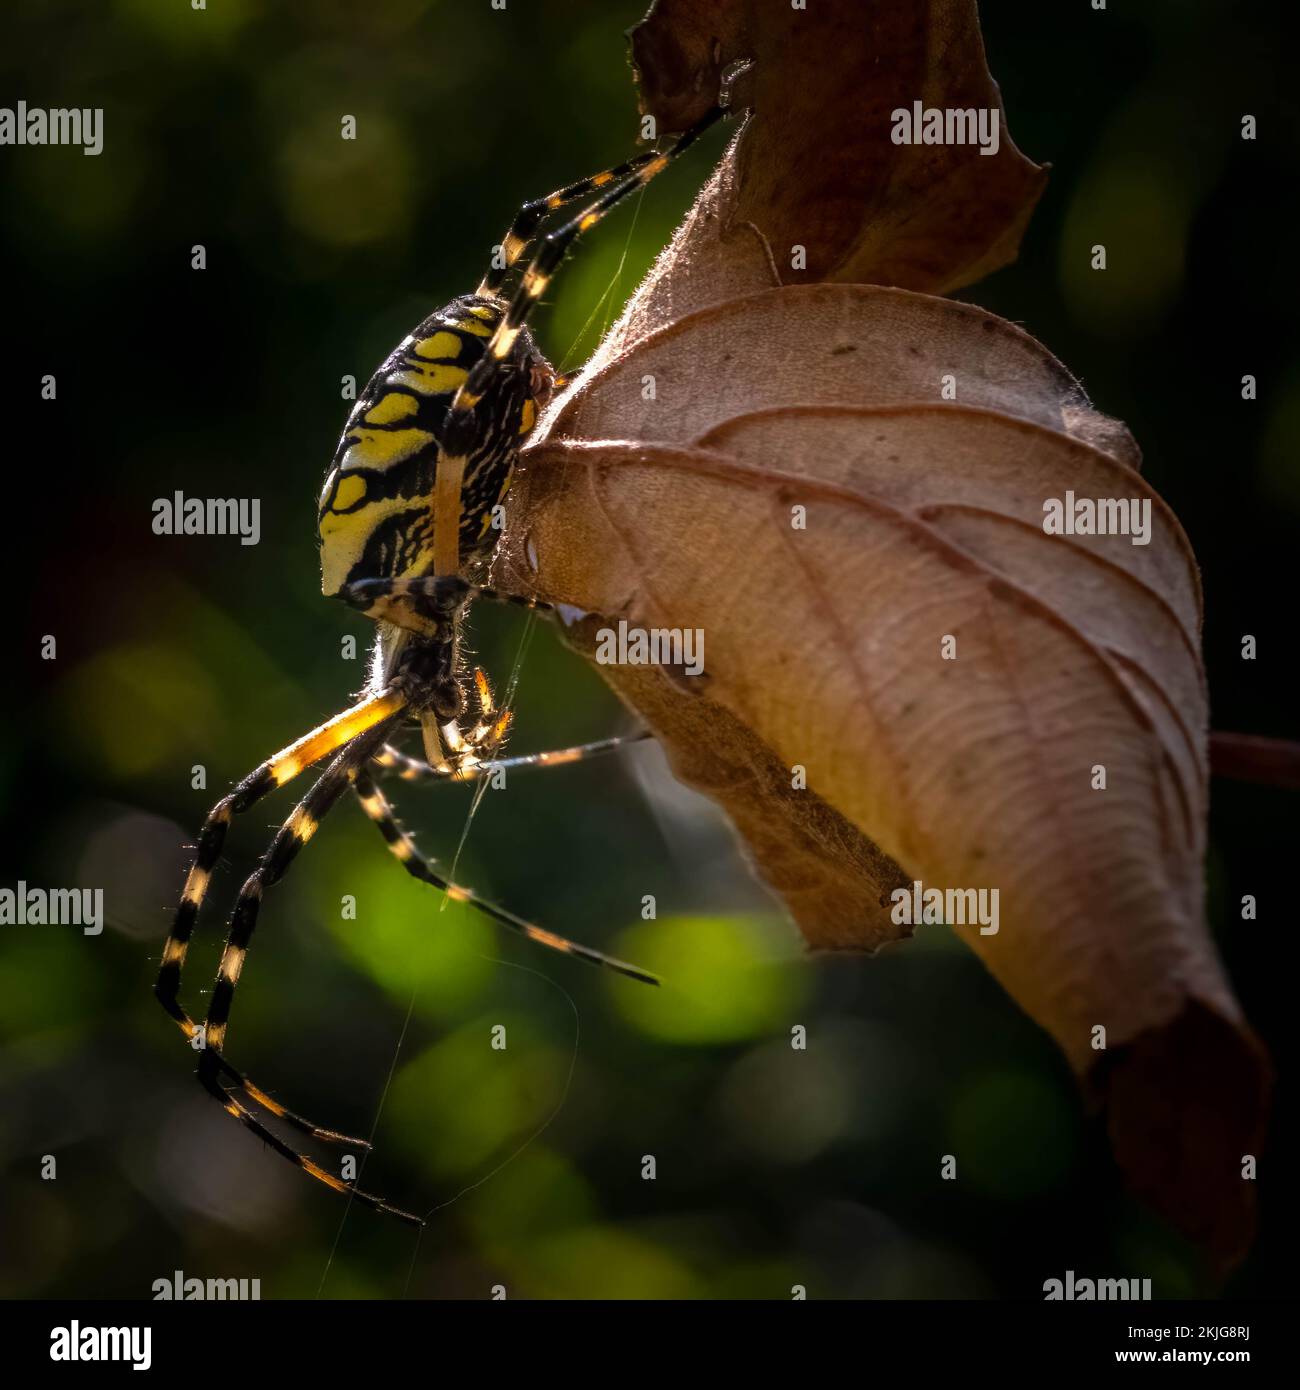 A Yellow Garden Spider (Argiope aurantia) on a crispy autumn leaf. Raleigh, North Carolina. Stock Photo